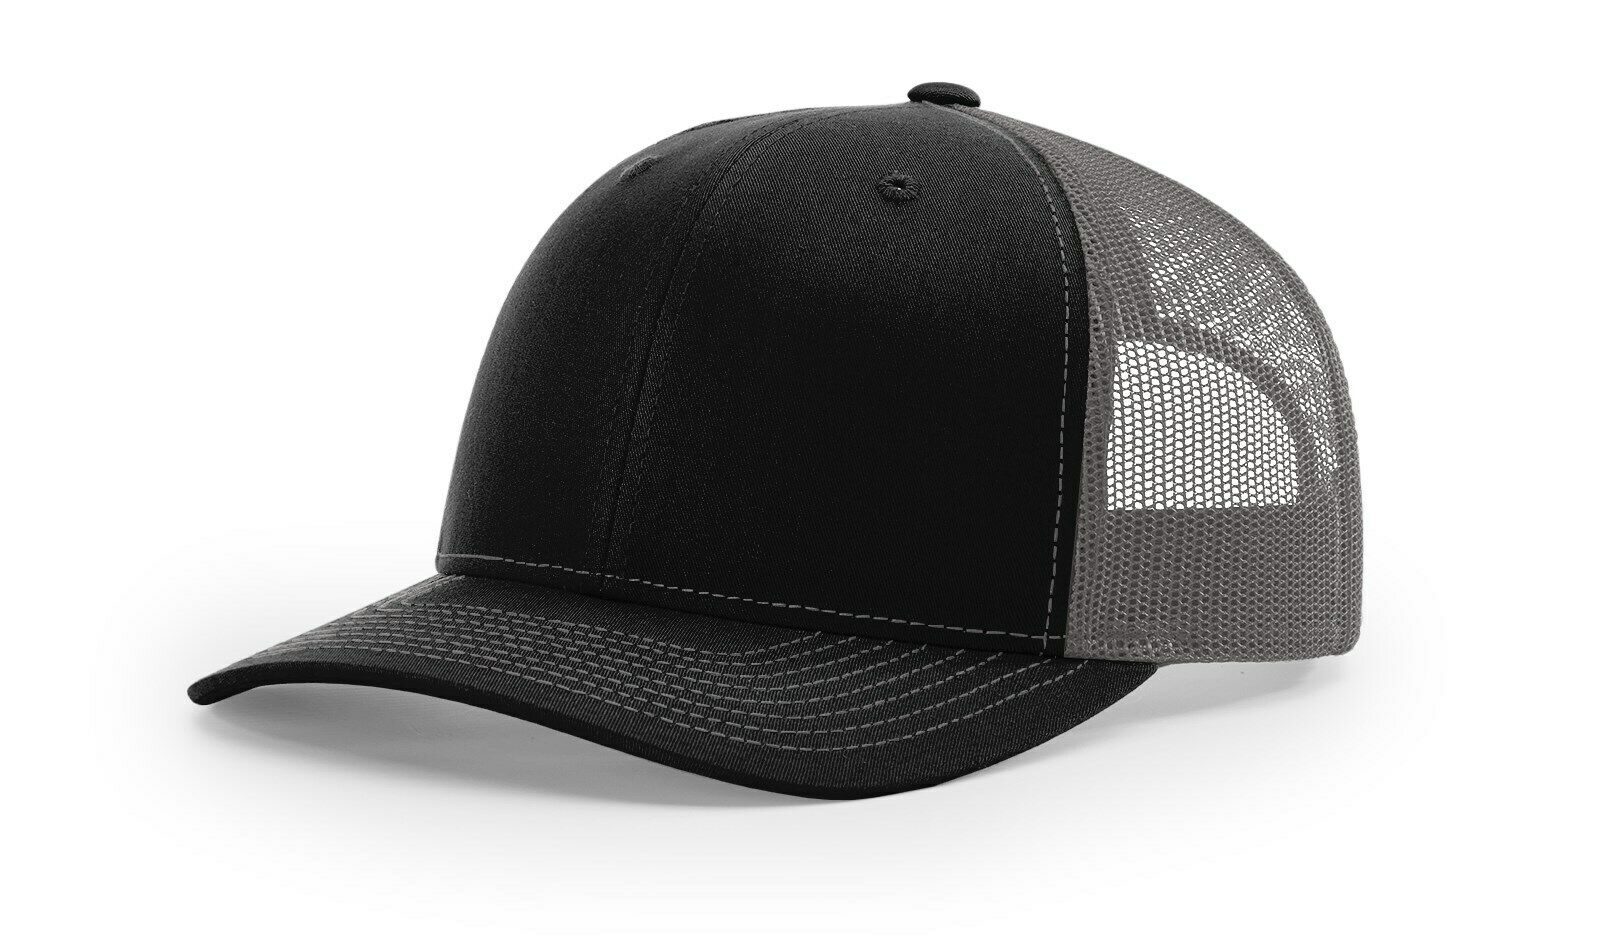 112 Richardson Trucker Ball Cap Mesh Hat Adjustable Snapbacks 80 Color Options